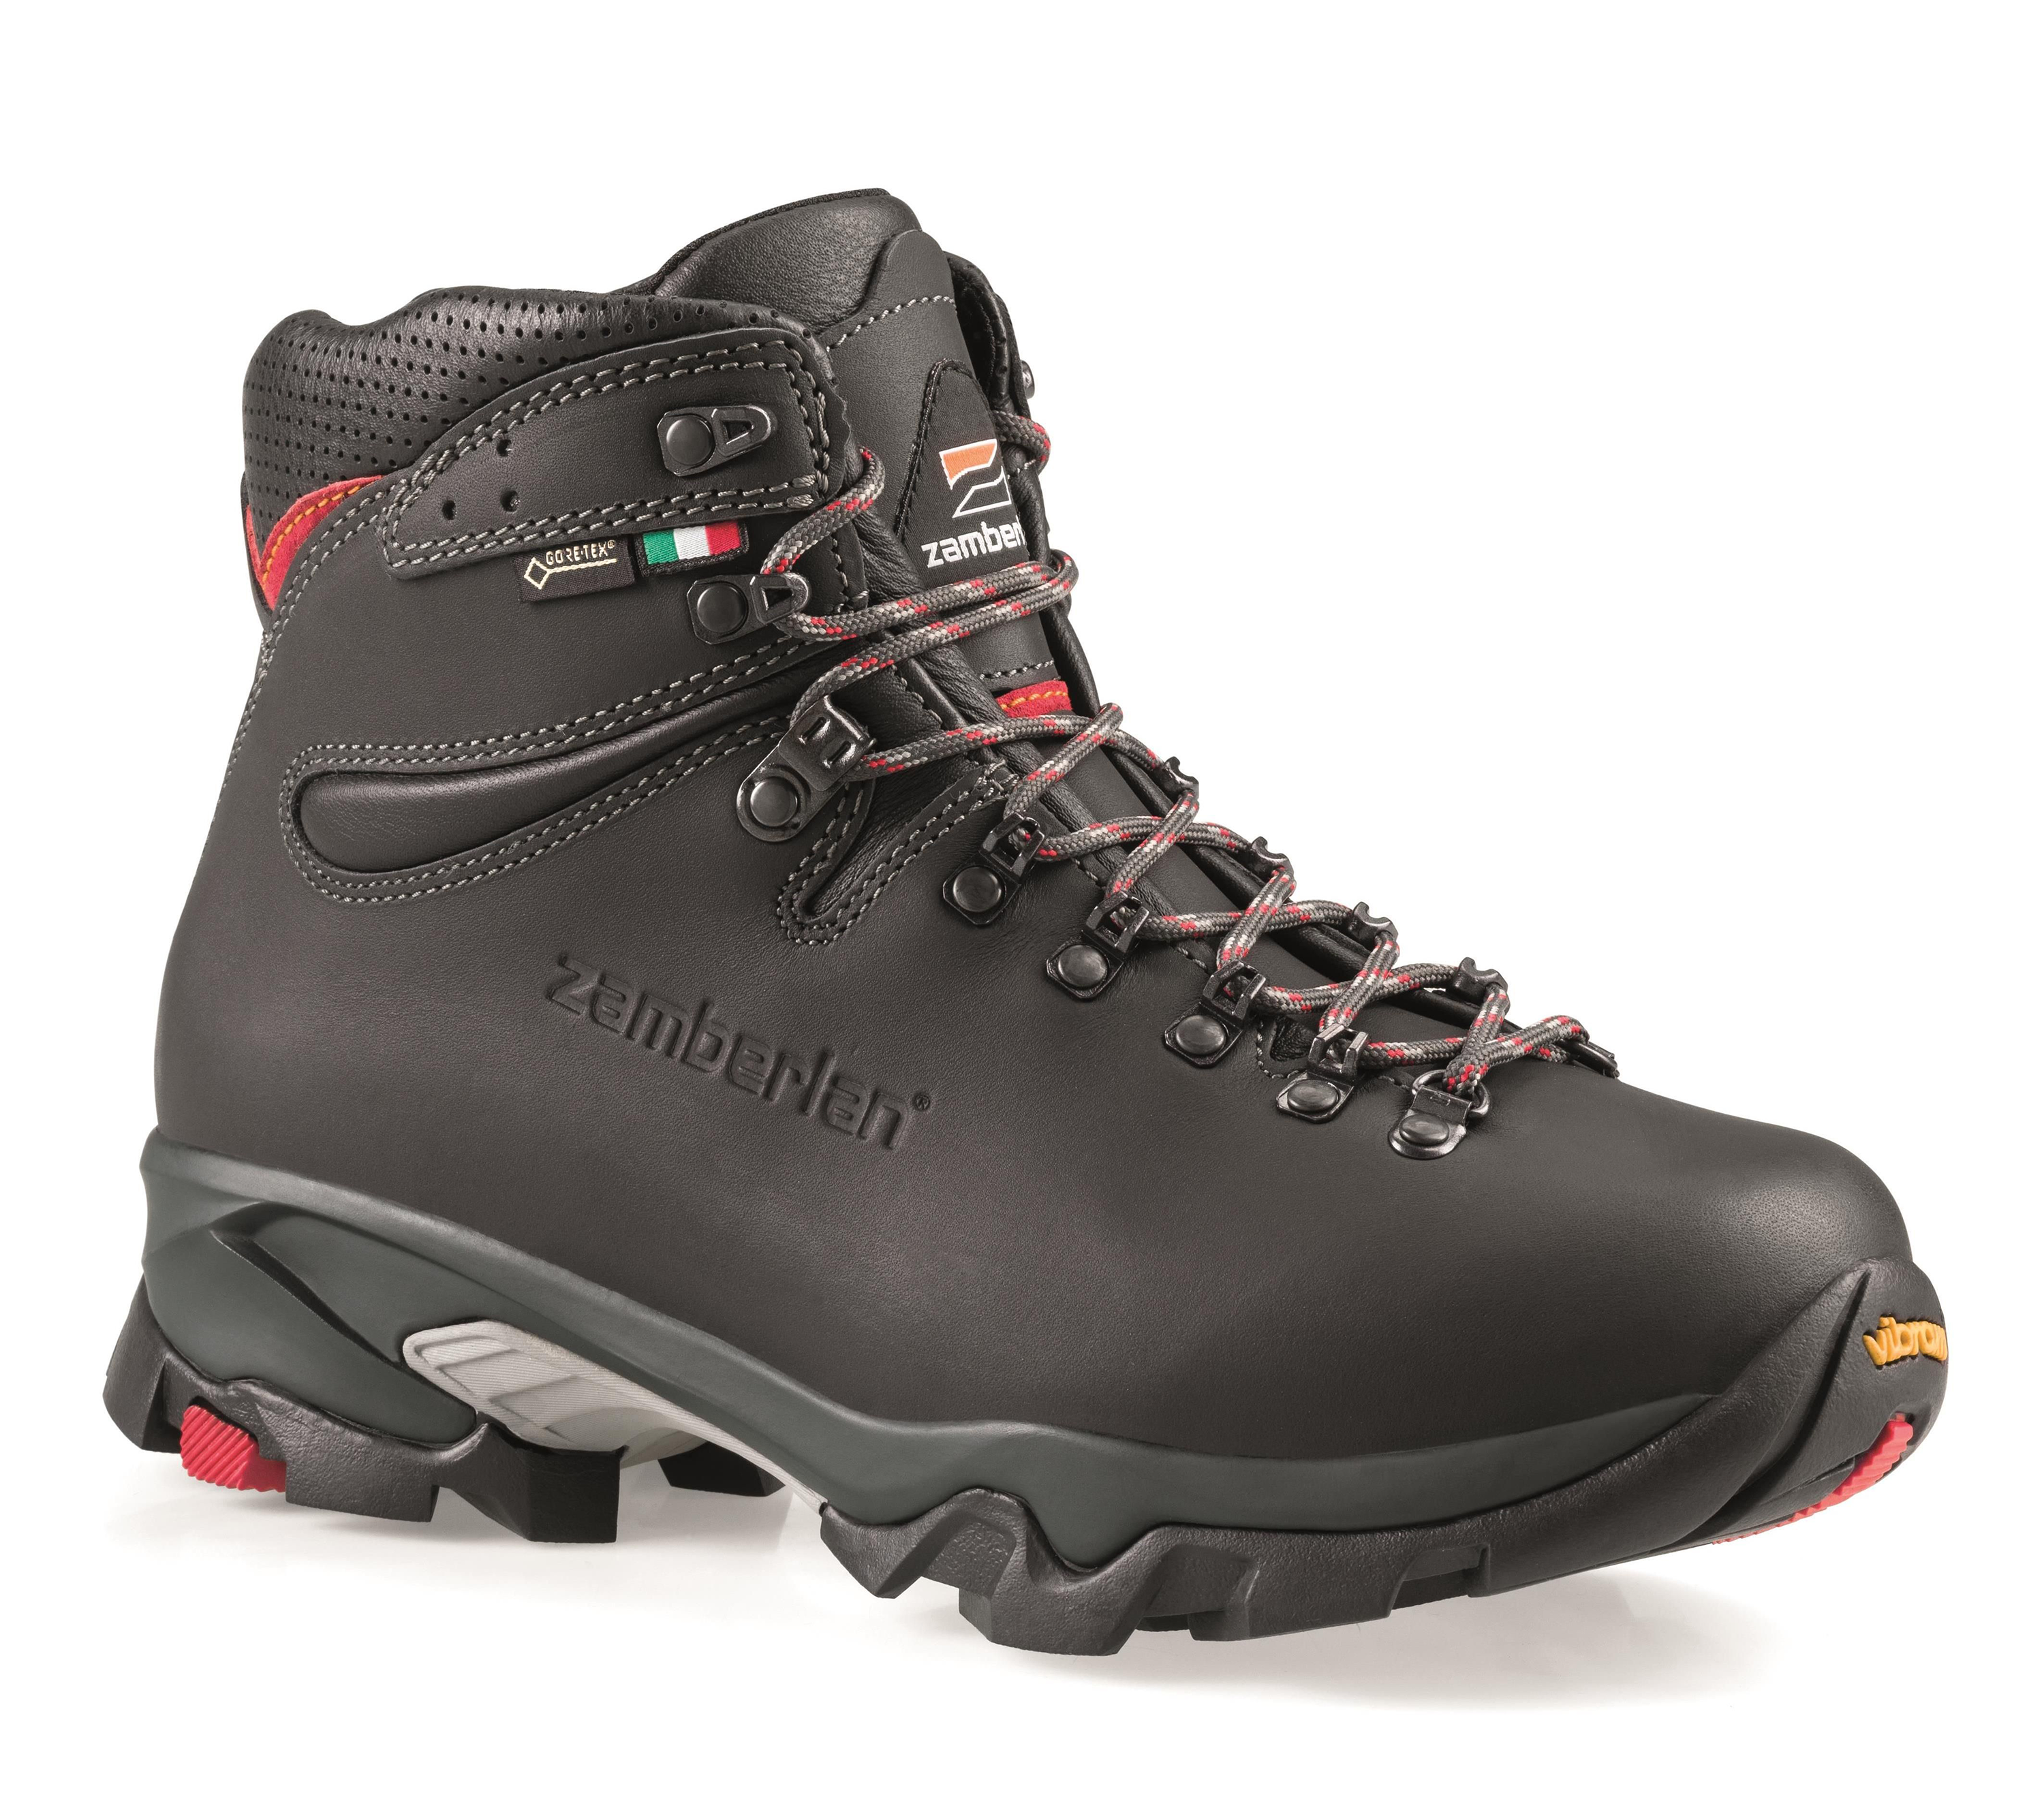 Zamberlan 996 Vioz GTX WL Waterproof Hiking Boots for Men - Dark Grey - 14W